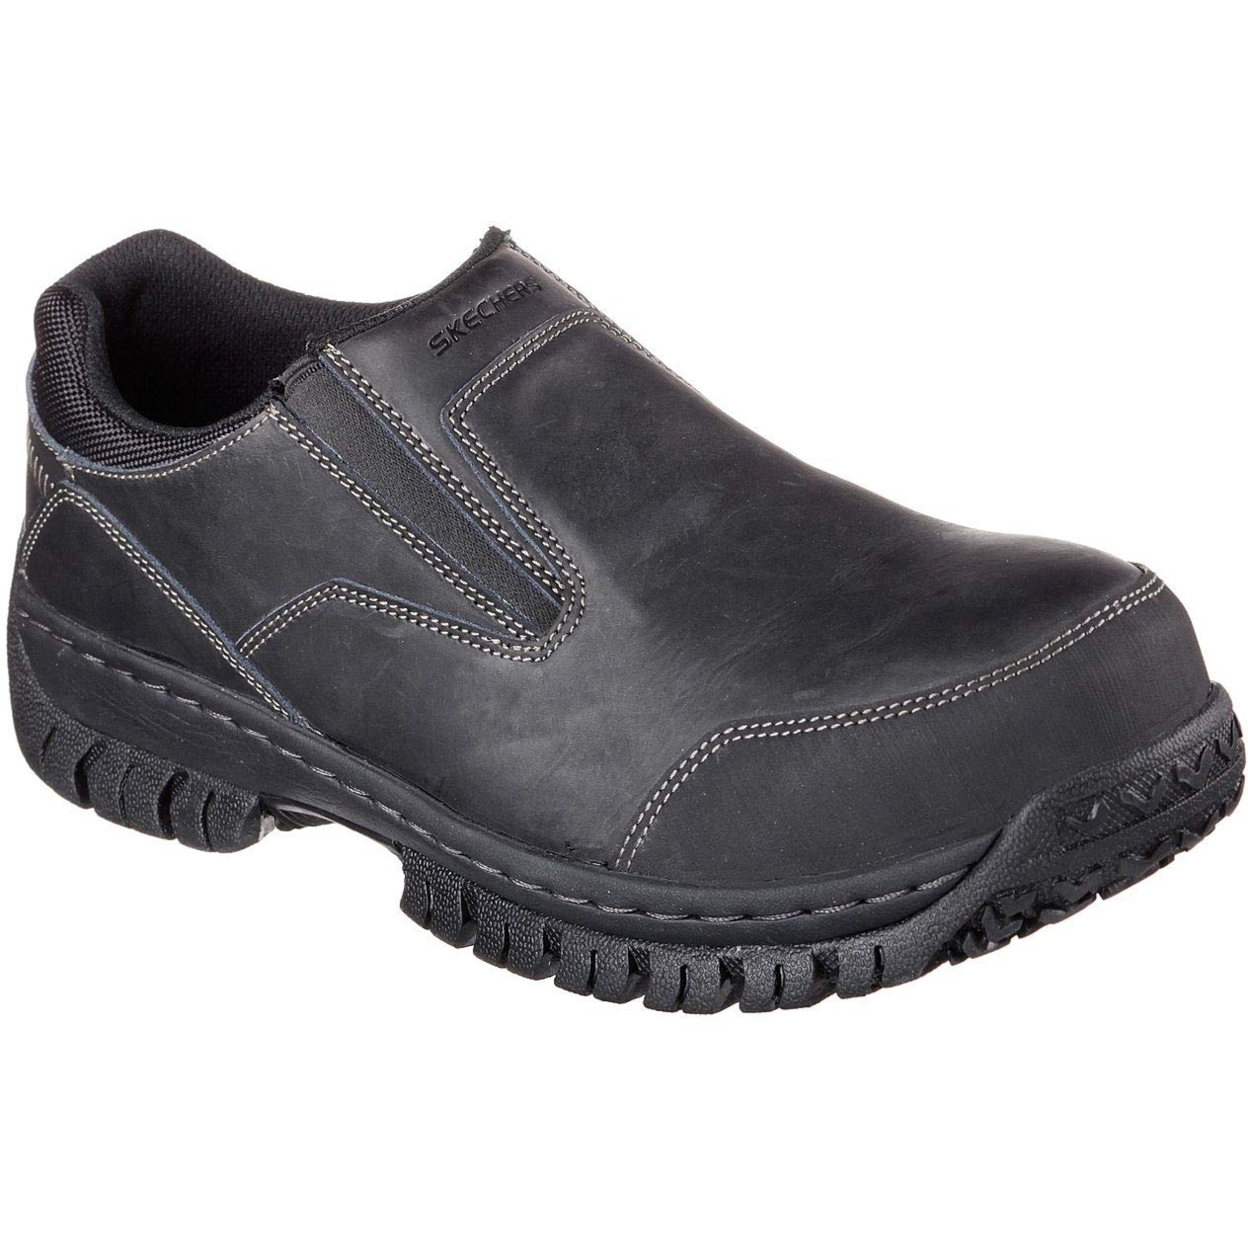 Skechers For Work Men's Hartan Steel Toe Slip-On Shoe Varies BLACK - BLACK, 14